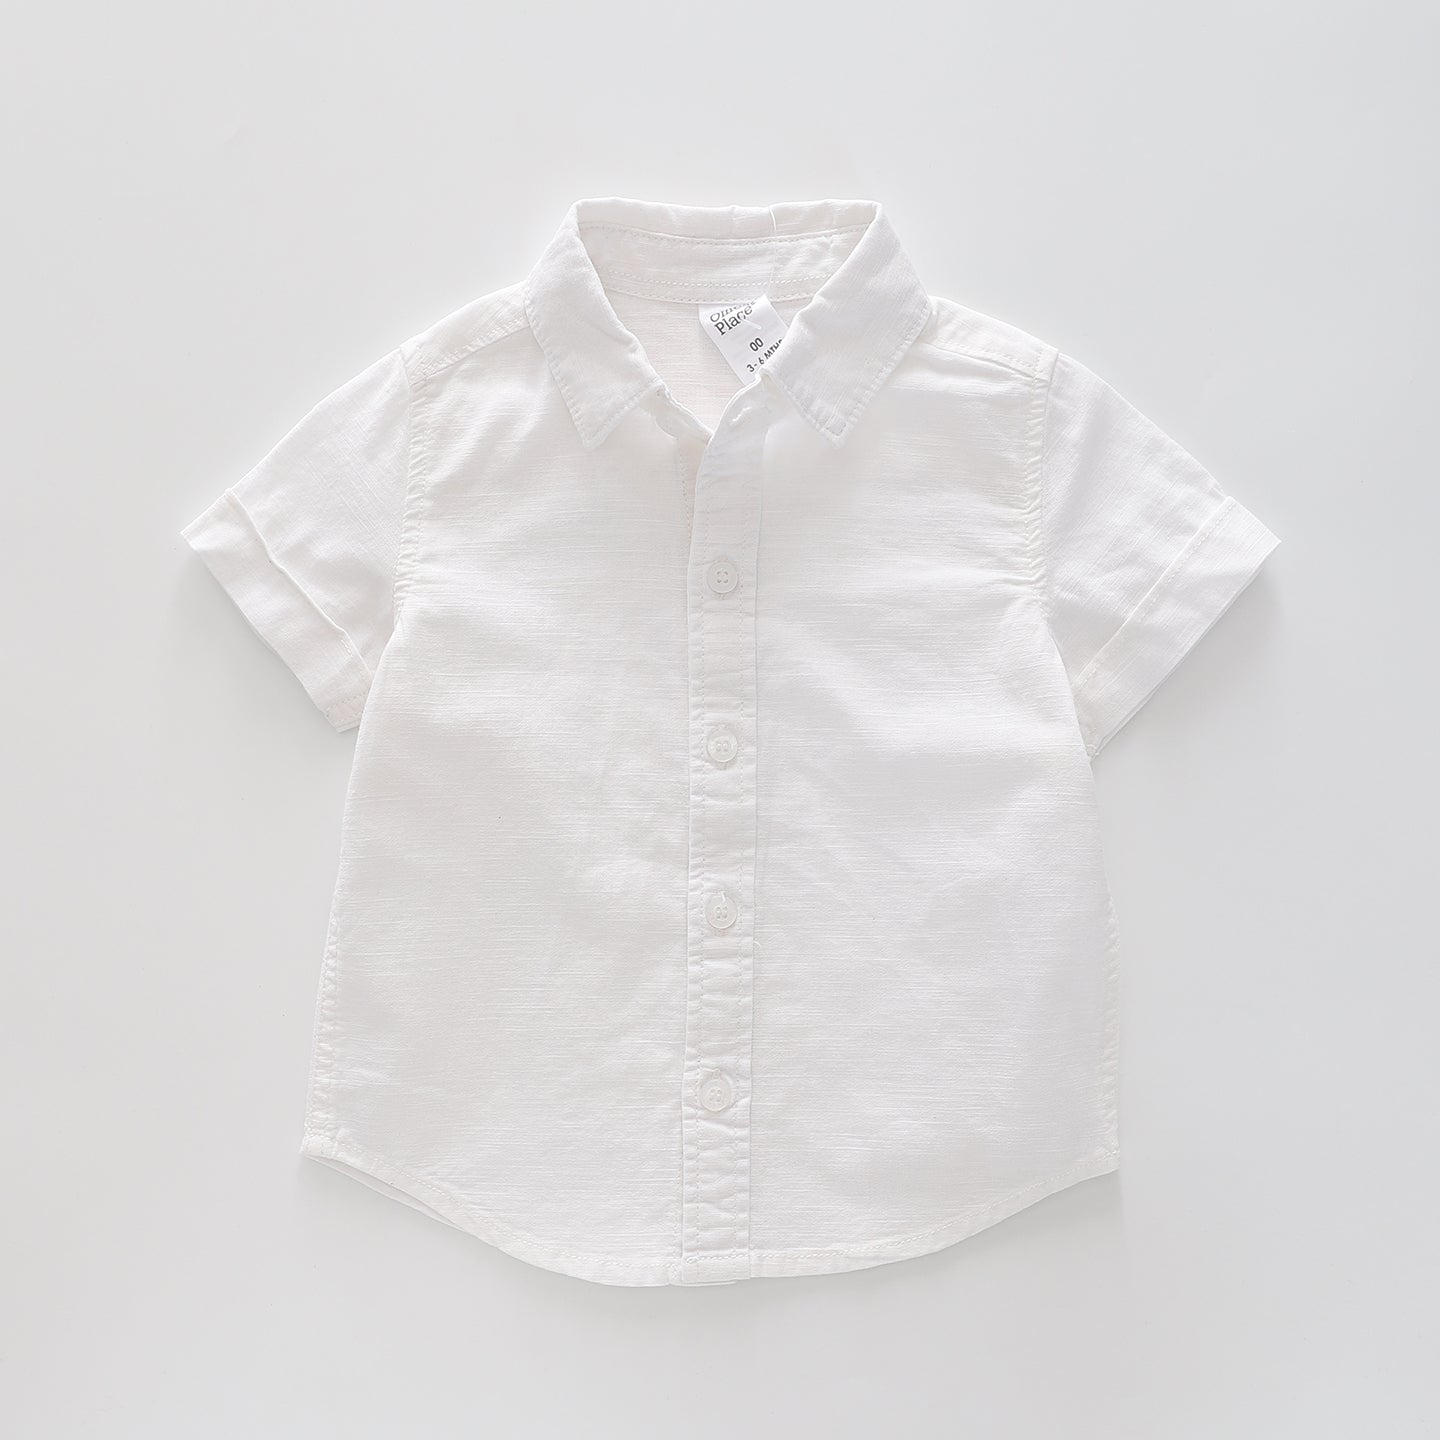 White Cotton Collared Shirt